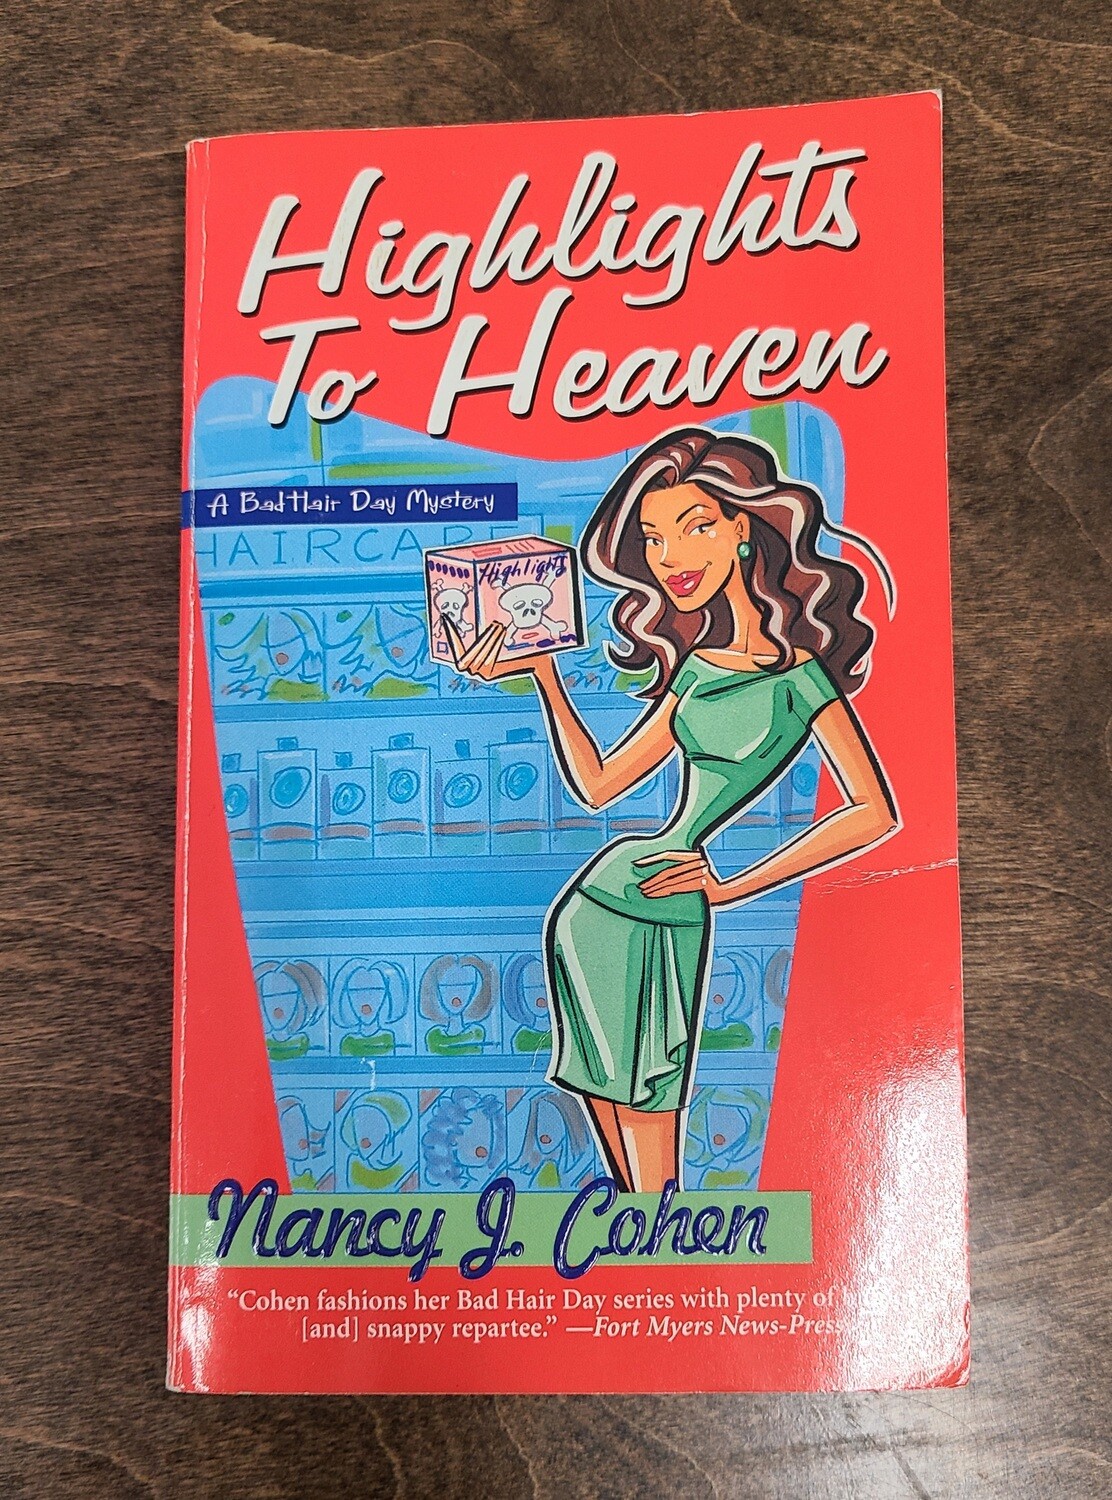 Highlights to Heaven by Nancy J. Cohen